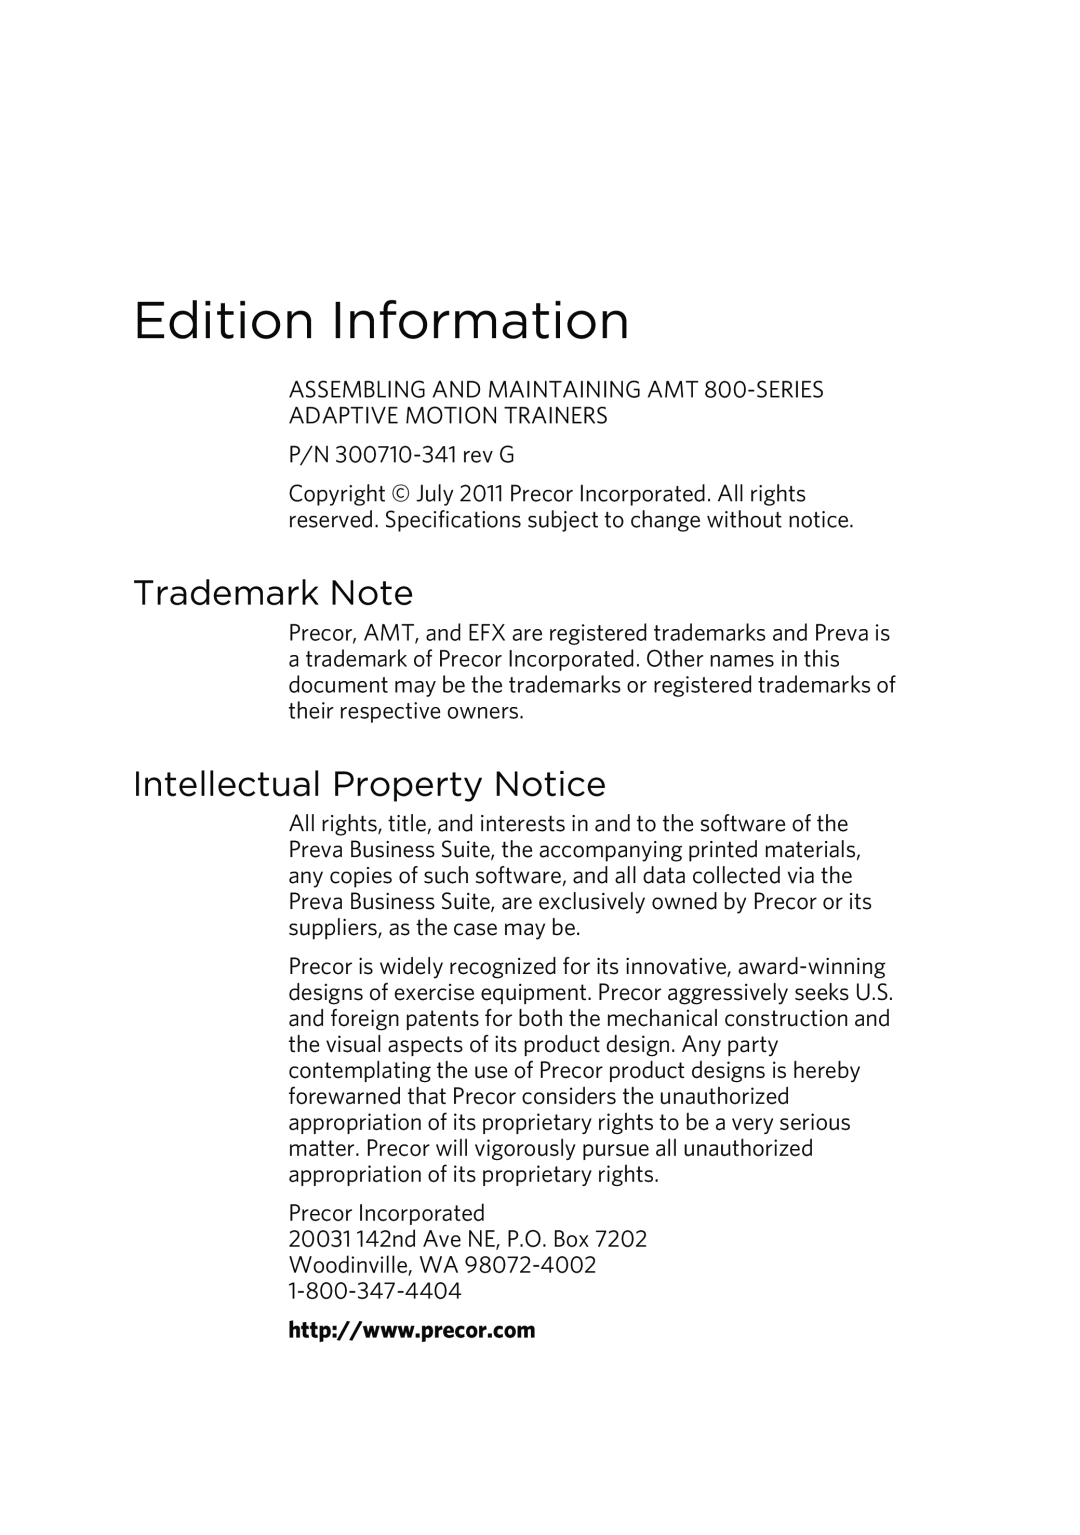 Precor P80 manual Edition Information, Trademark Note, Intellectual Property Notice, P/N 300710-341rev G 